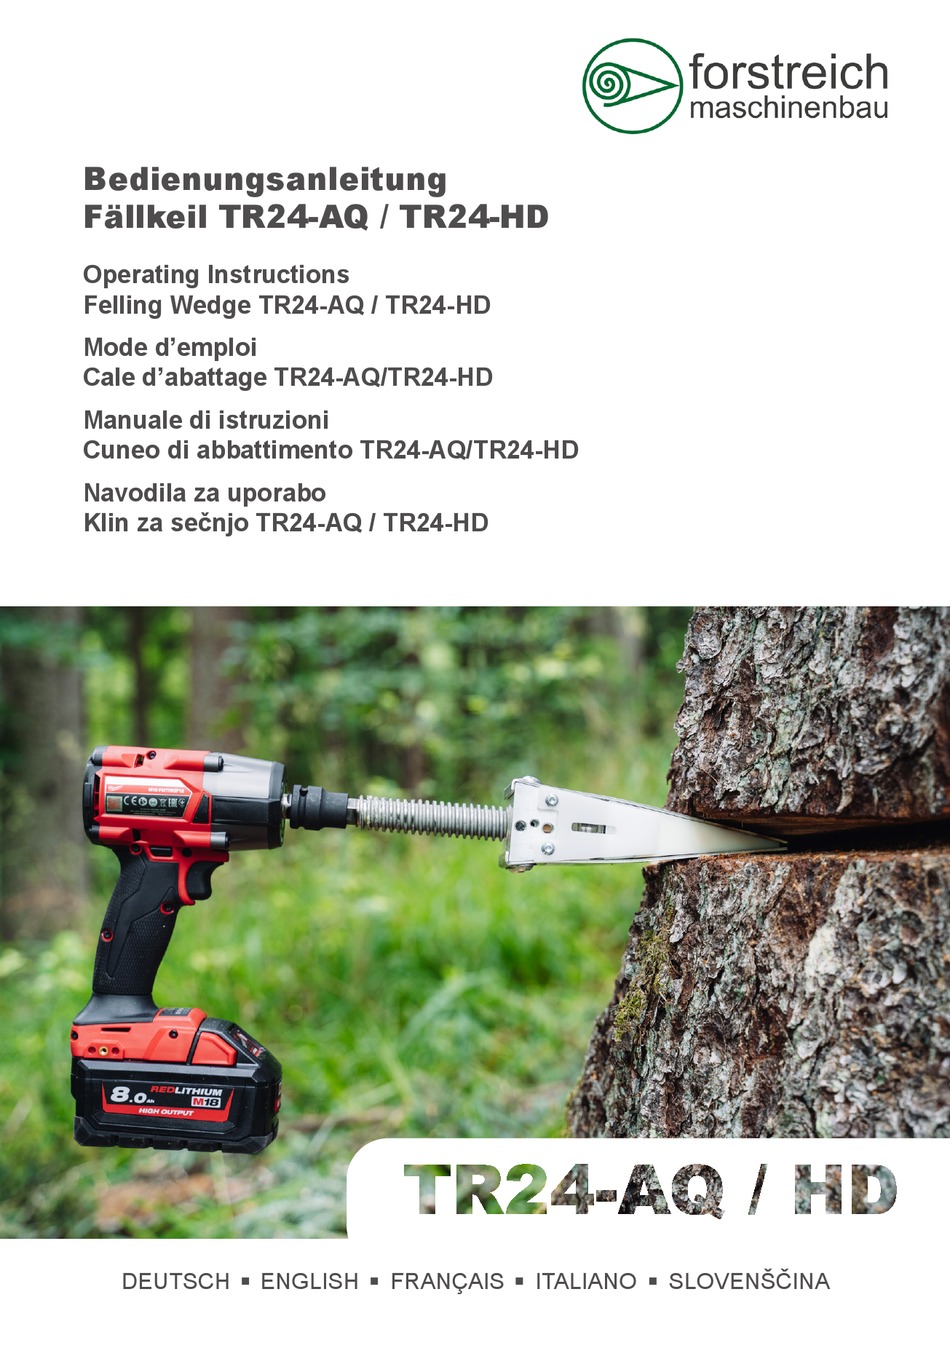 Fällkeil TR24-HD - Forstreich Maschinenbau